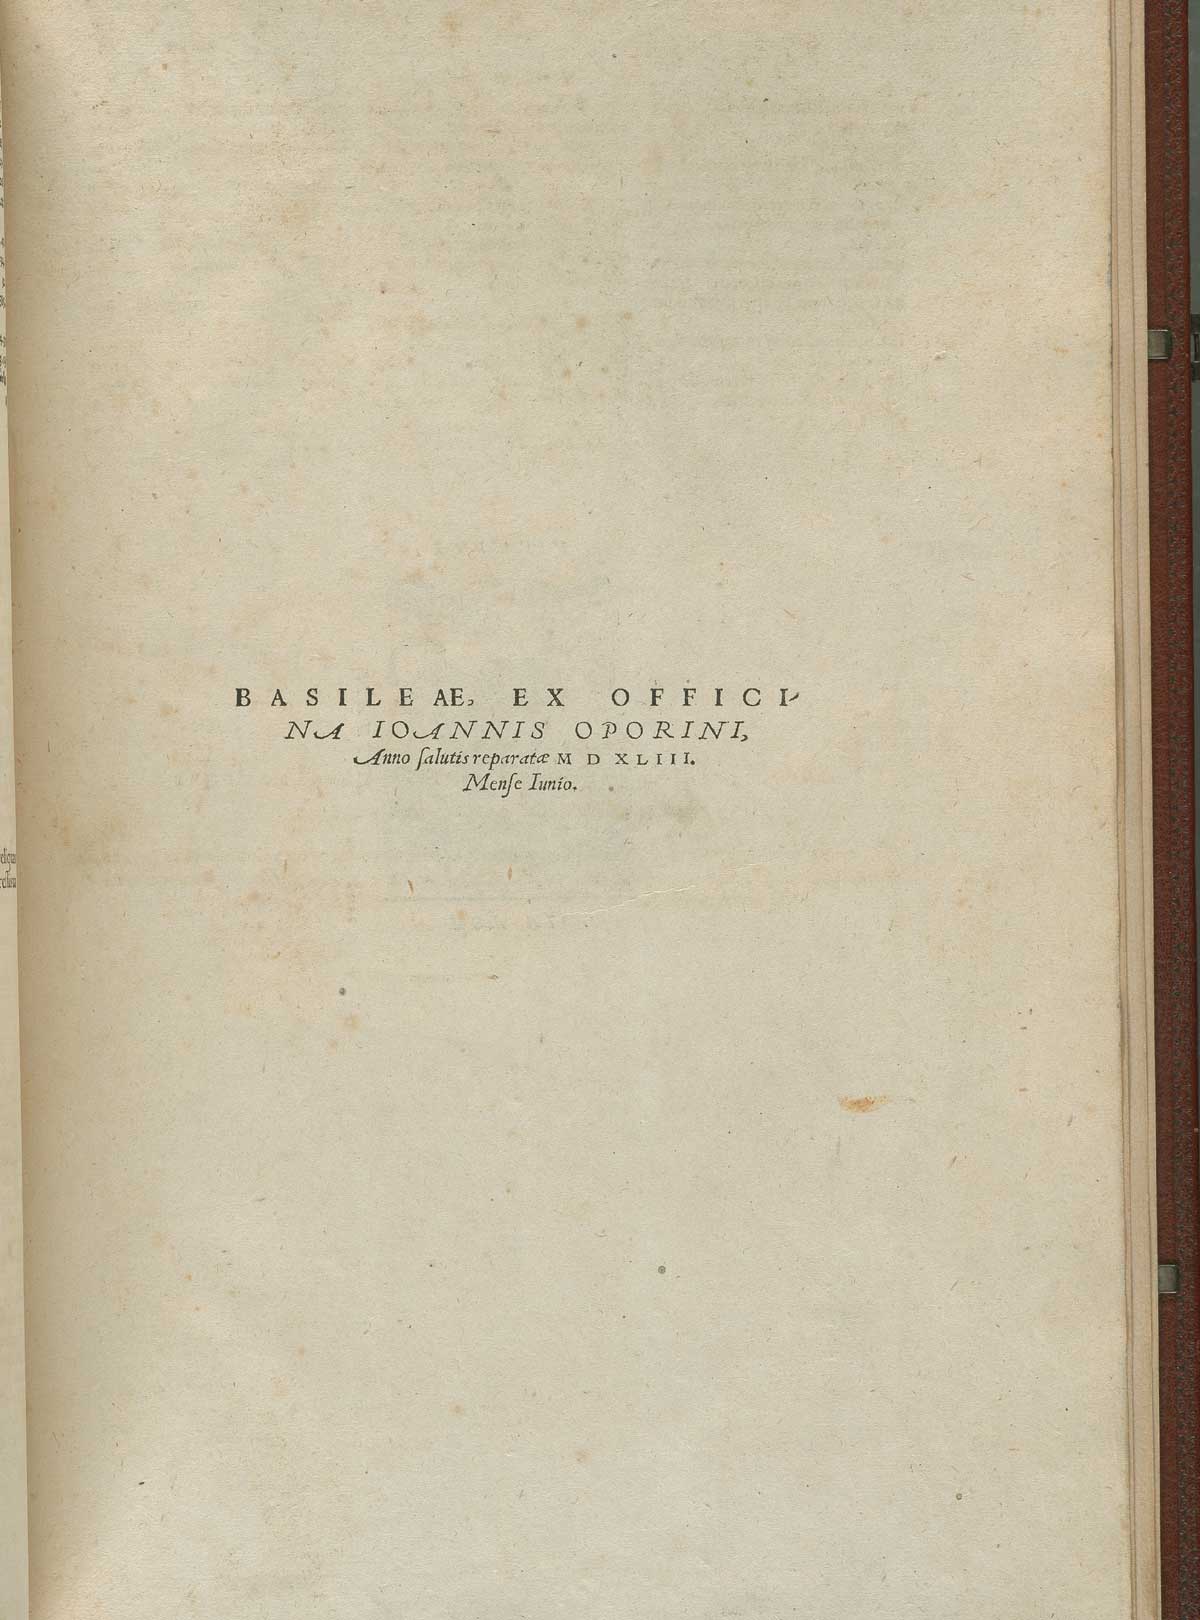 The colophon of Andreas Vesalius' De corporis humani fabrica libri septem.